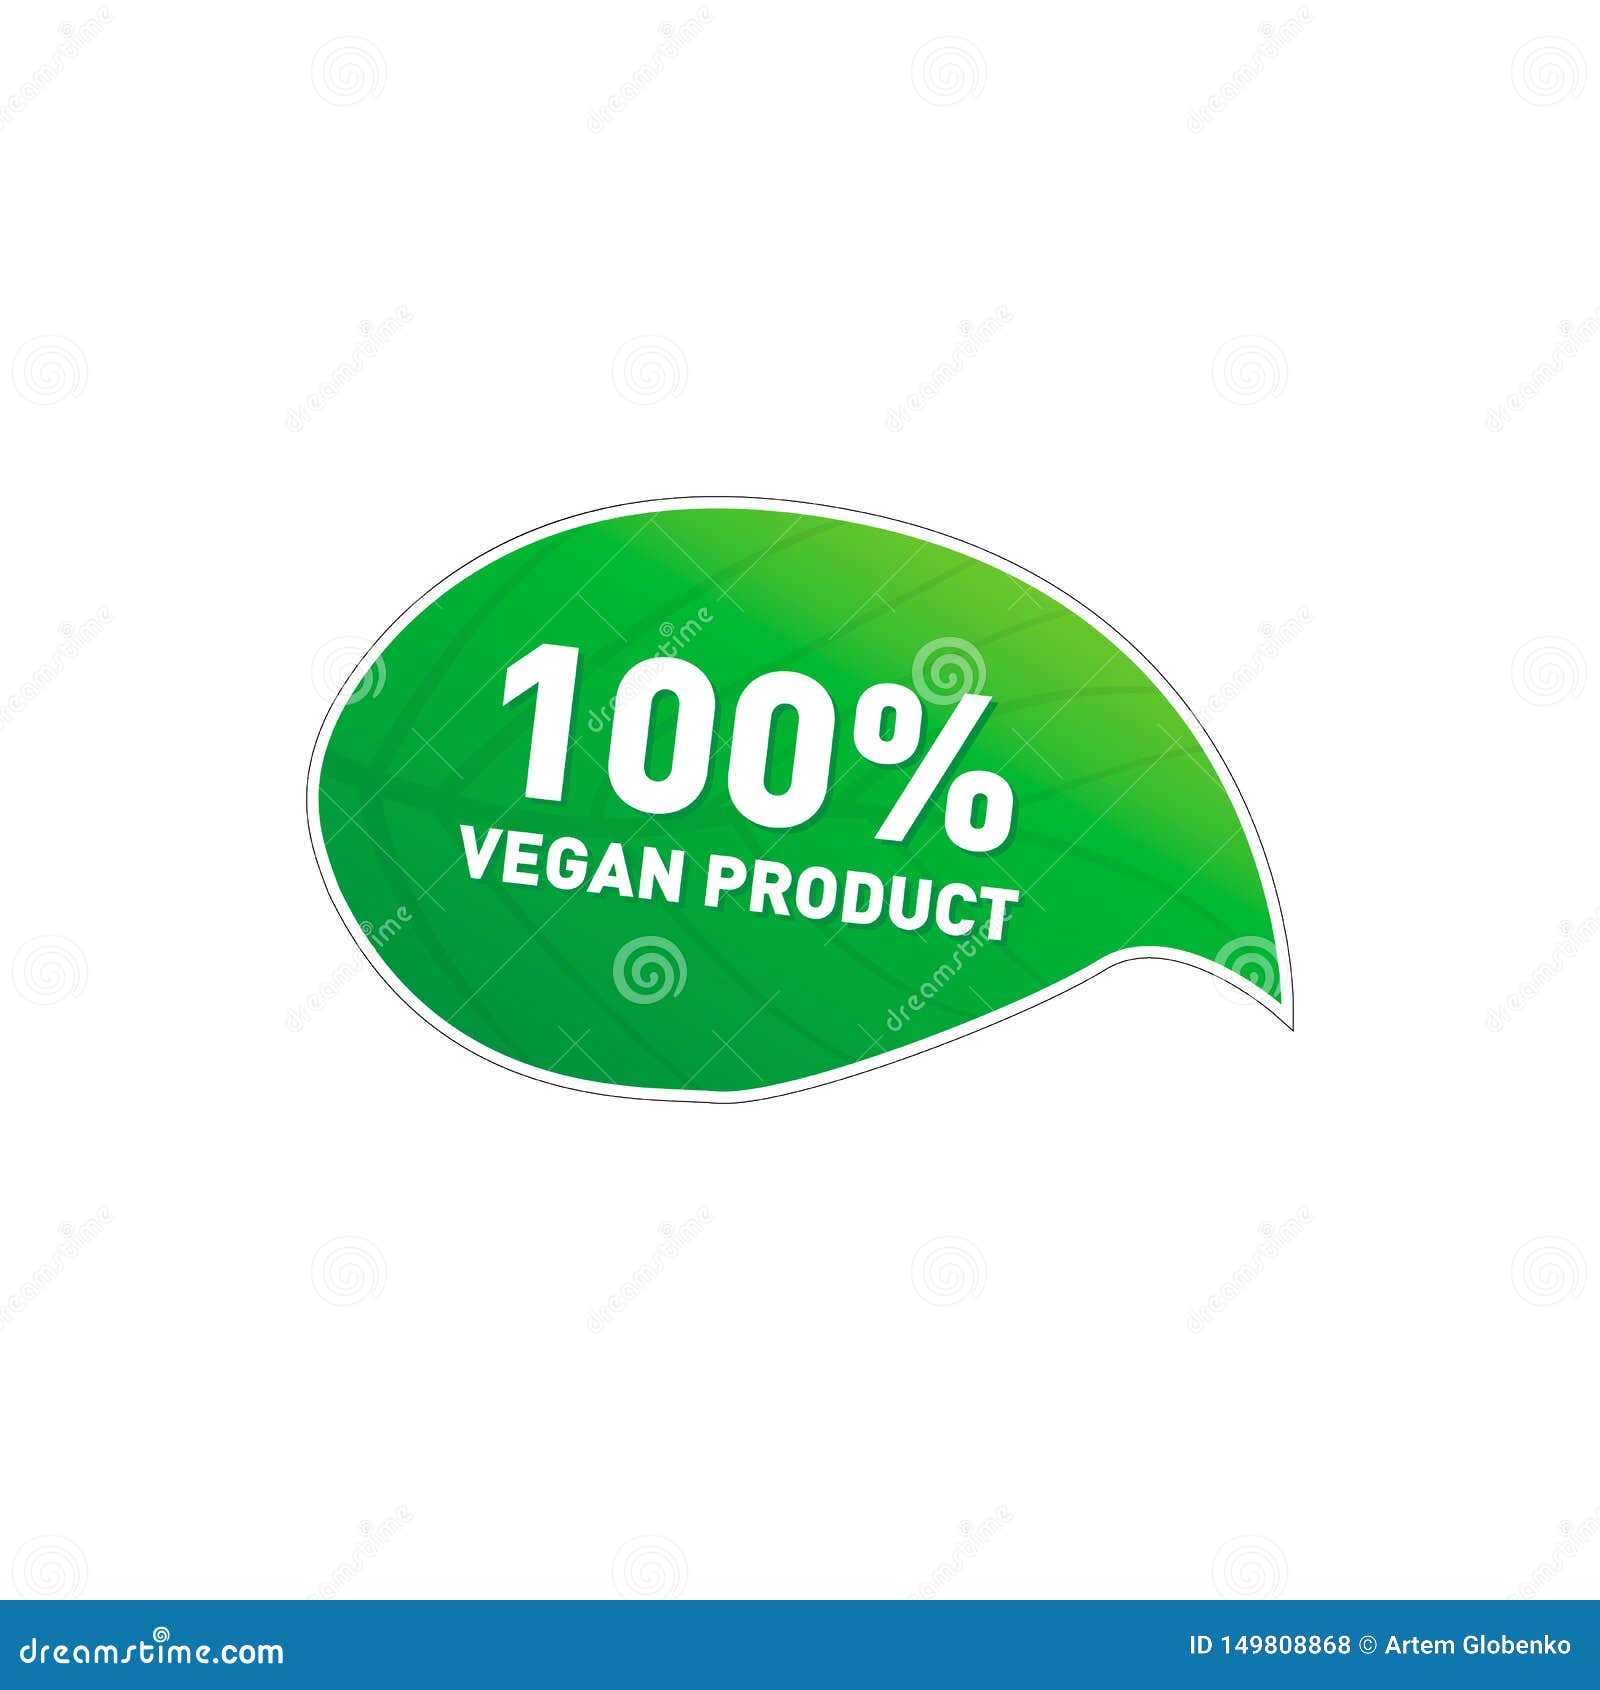 New Veg & Non Veg Logo by FSSAI - FoodTech Pathshala